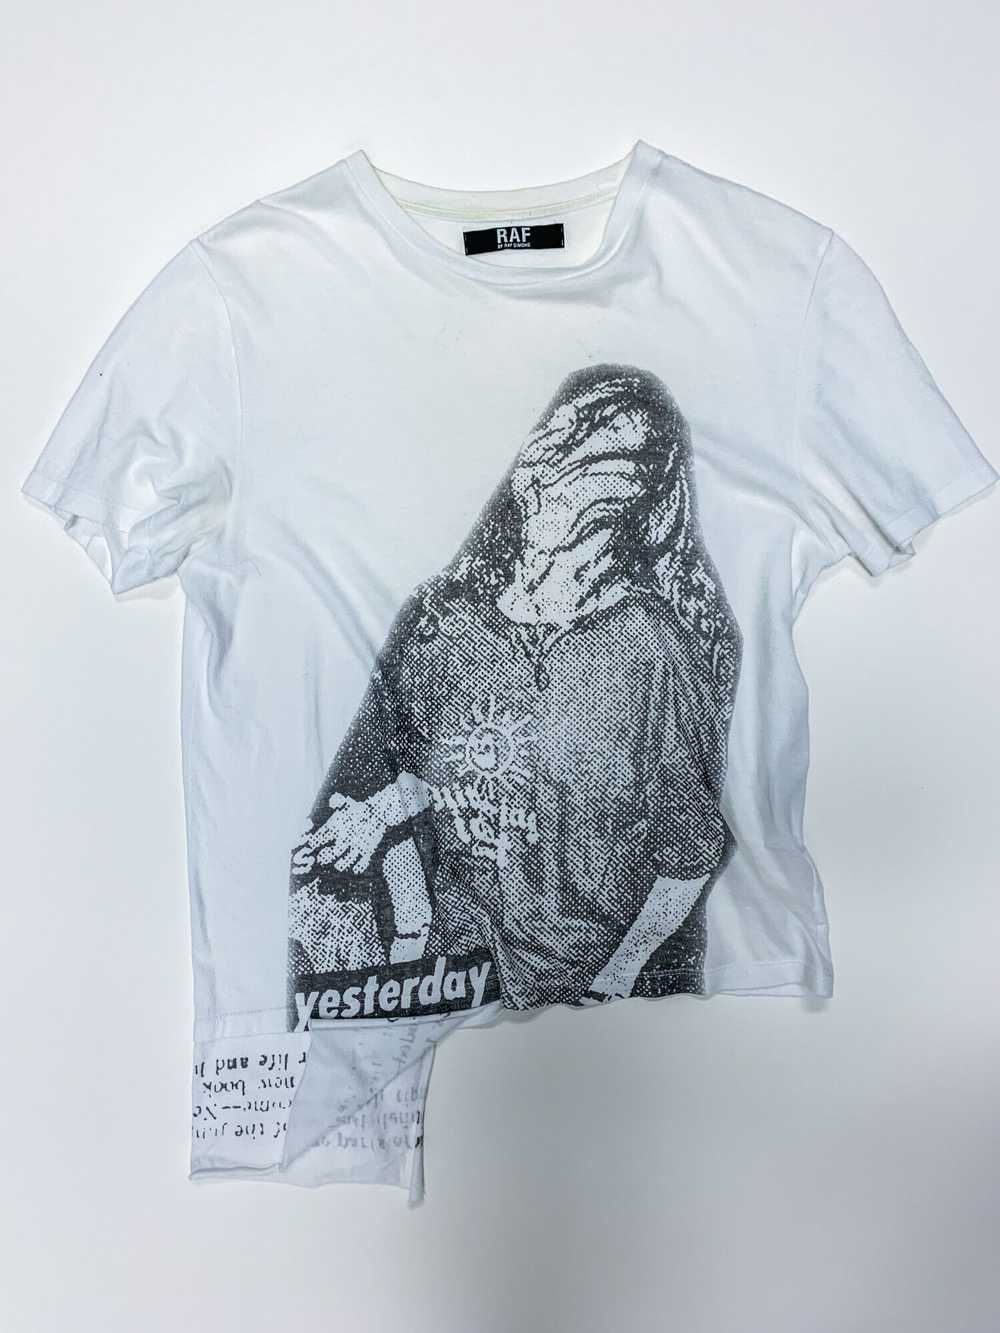 Raf by Raf Simons Cutoff Print T-Shirt "Yesterday" - image 1